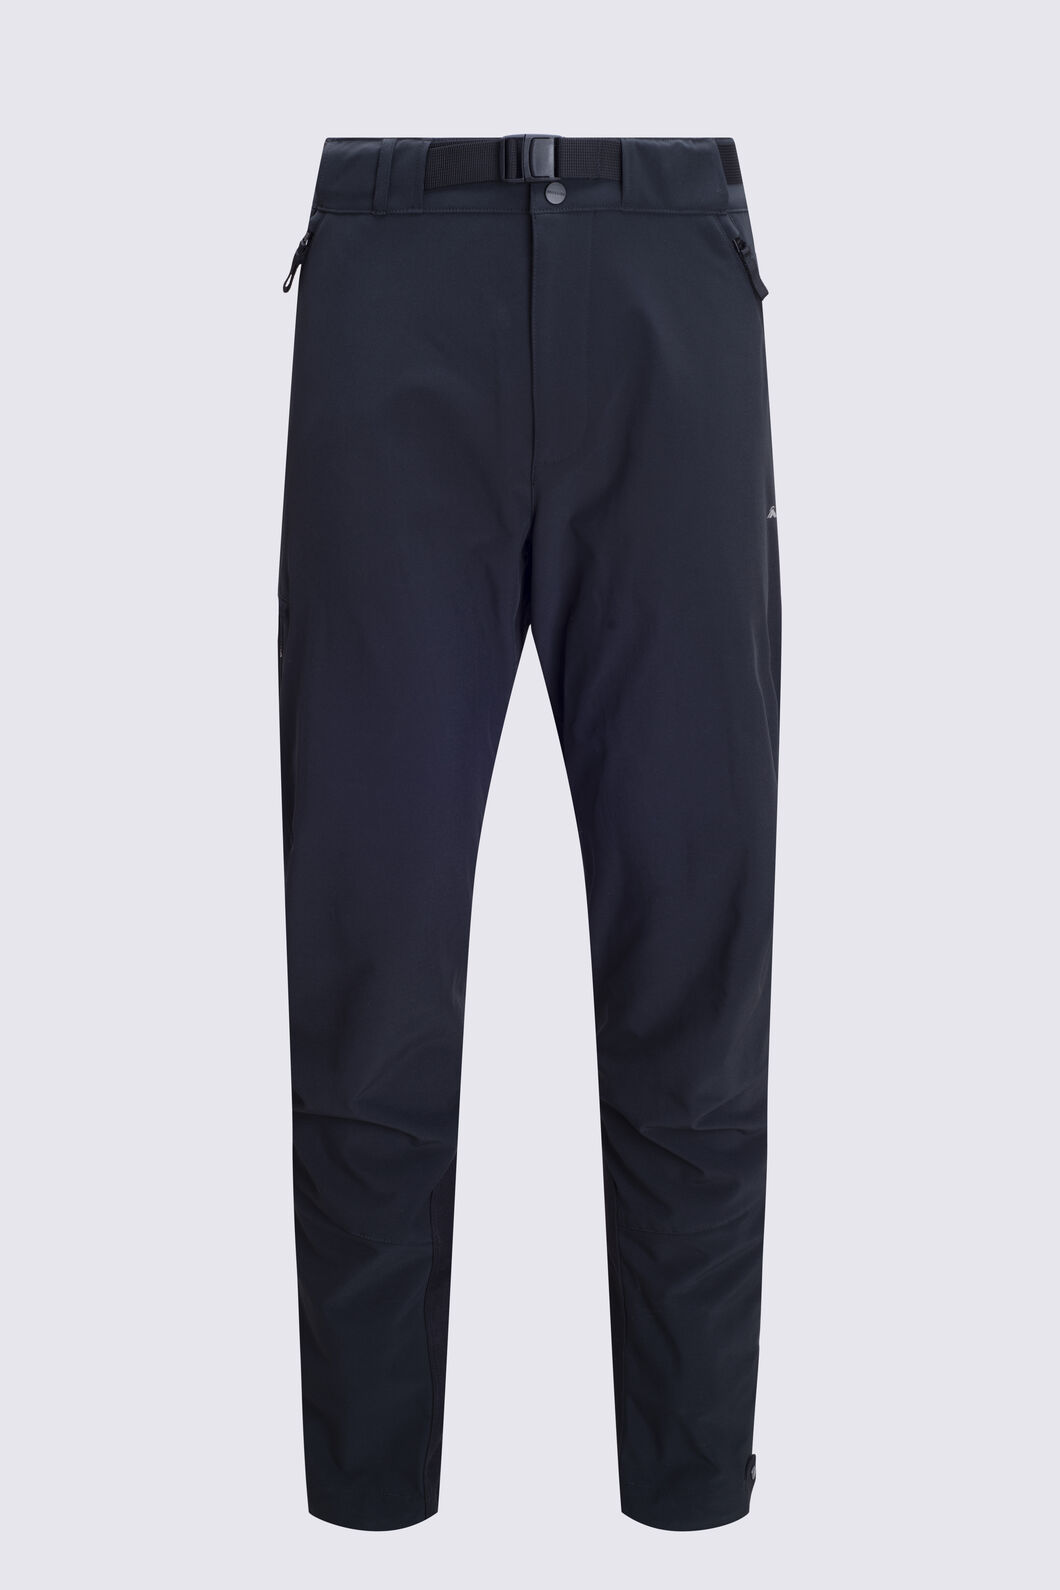 Macpac Fitzroy Alpine Series Softshell Pants — Men's | Macpac